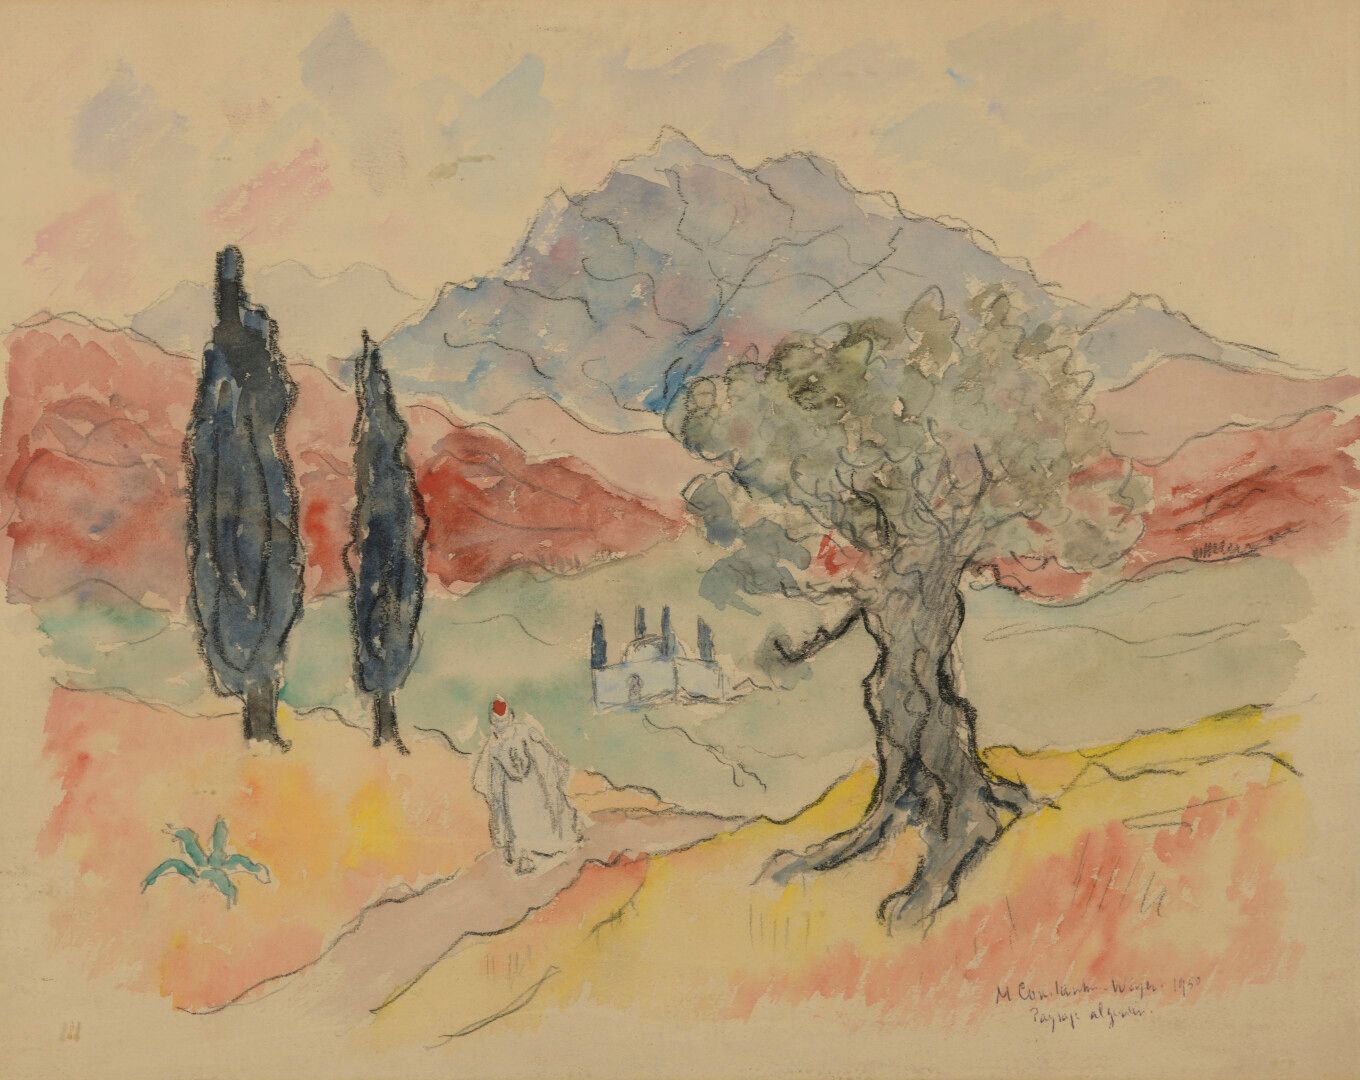 Maurice CONSTANTIN-WEYER (1881-1964) 莫里斯-康斯坦丁-韦耶(1881-1964)

阿尔及利亚的风景

纸上水彩画。

右&hellip;